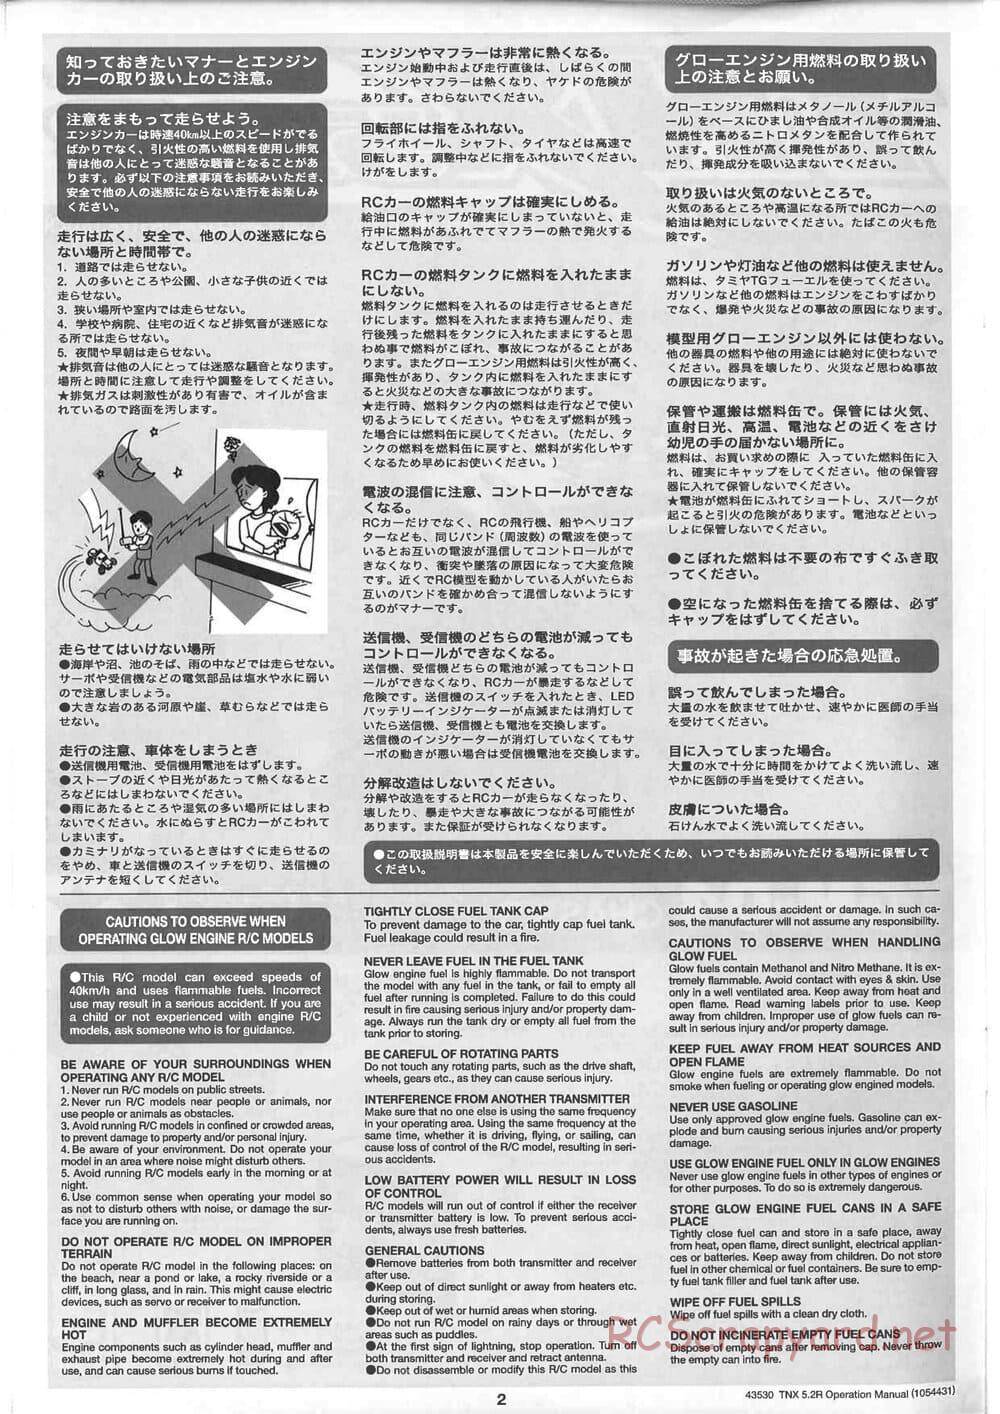 Tamiya - TNX 5.2R - TGM-04 - Operating Manual - Page 2